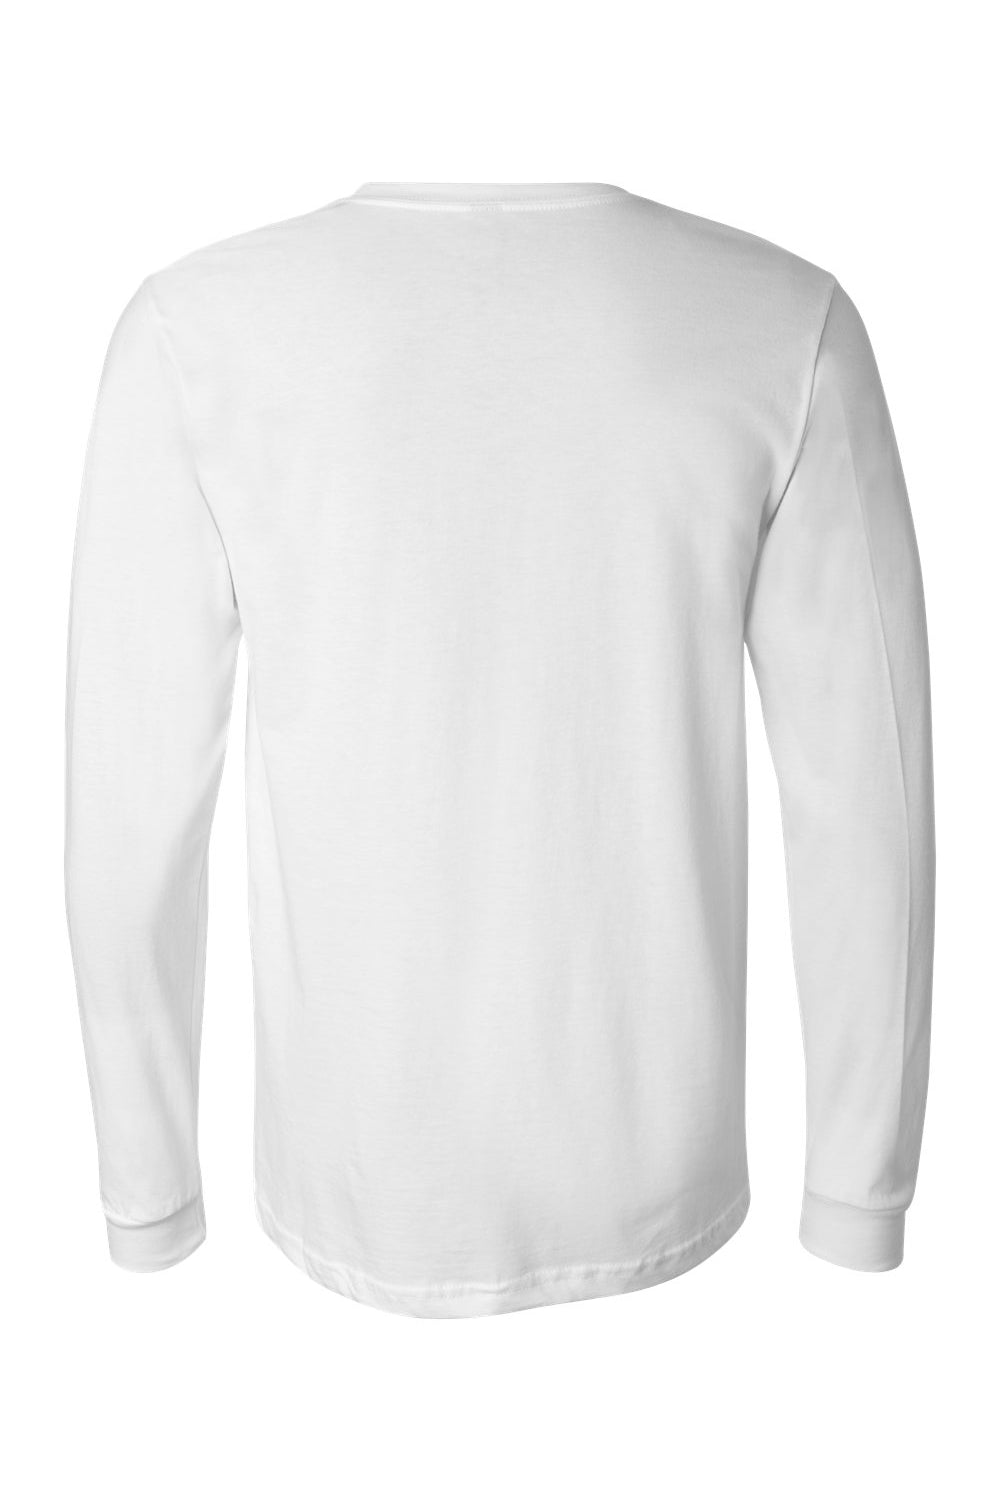 Bella + Canvas BC3501/3501 Mens Jersey Long Sleeve Crewneck T-Shirt White Flat Back